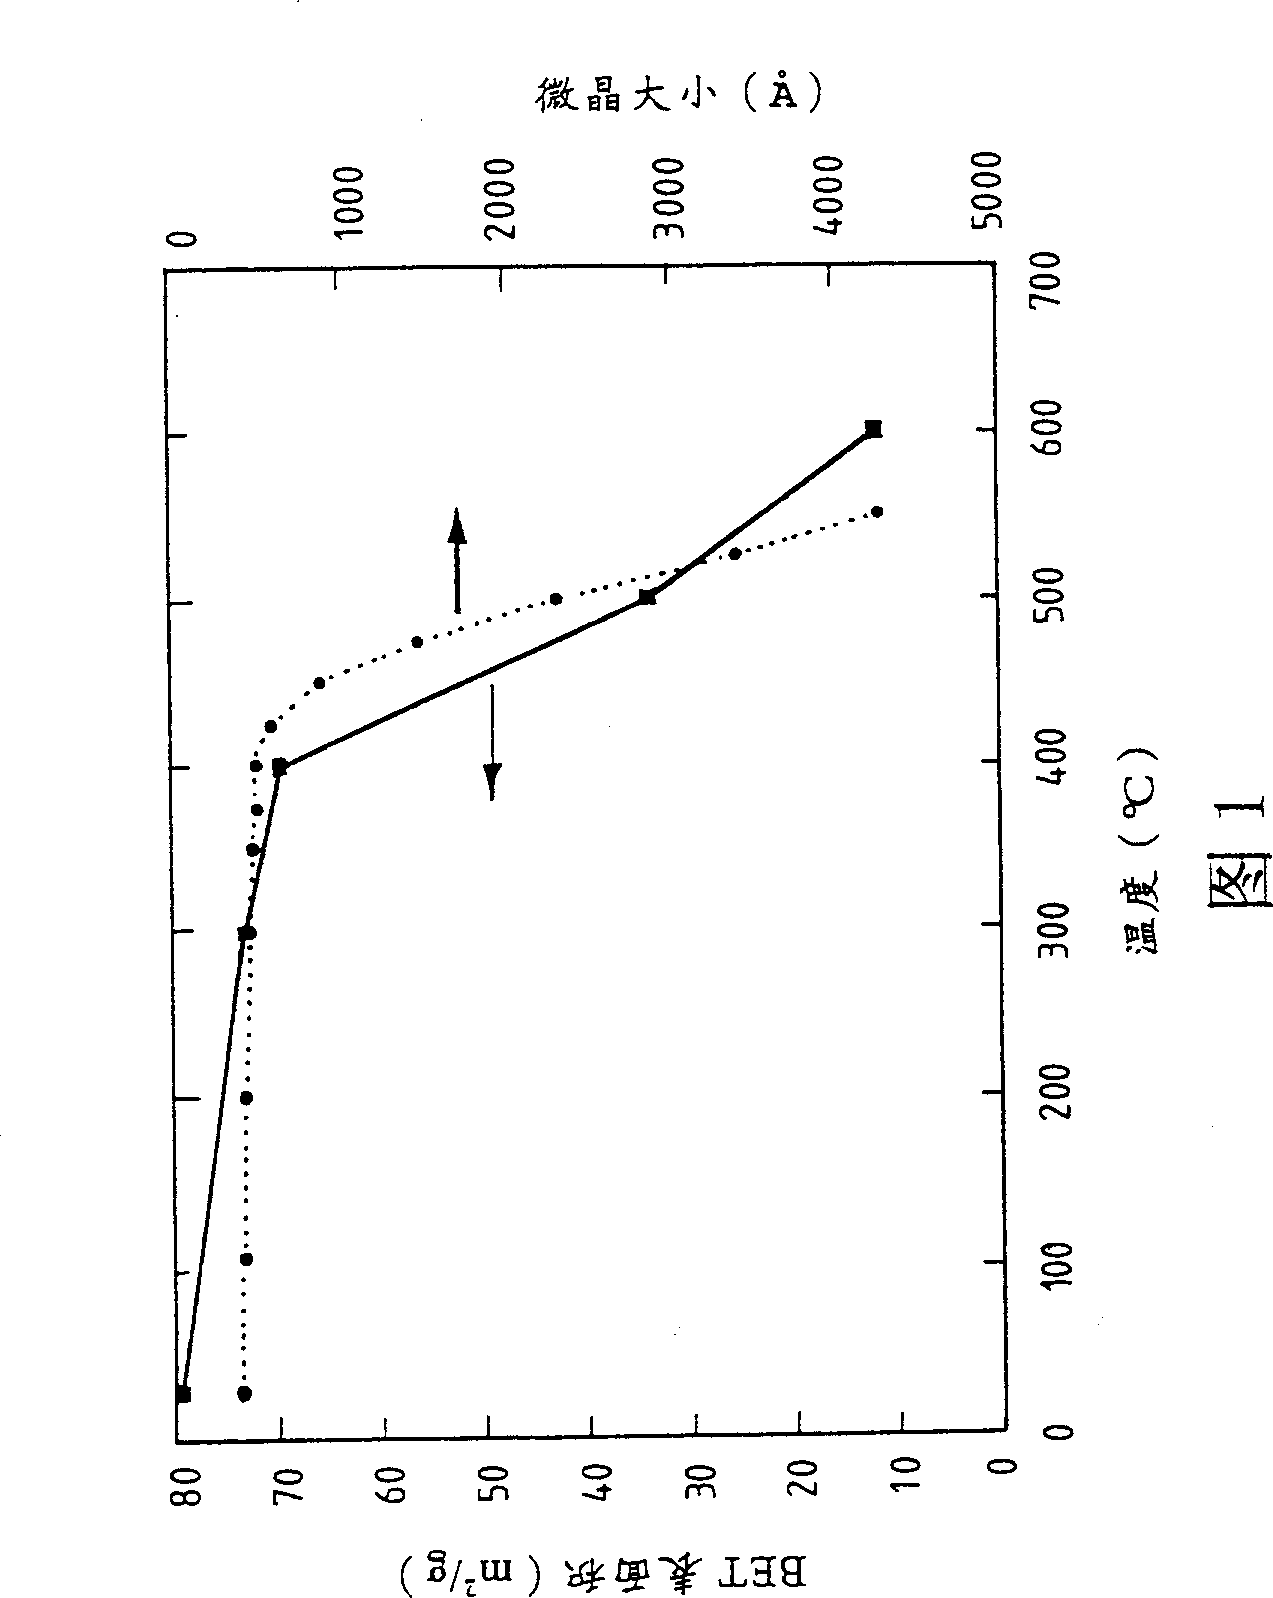 Heteropoly acid/multimetal oxacid salt catalyst